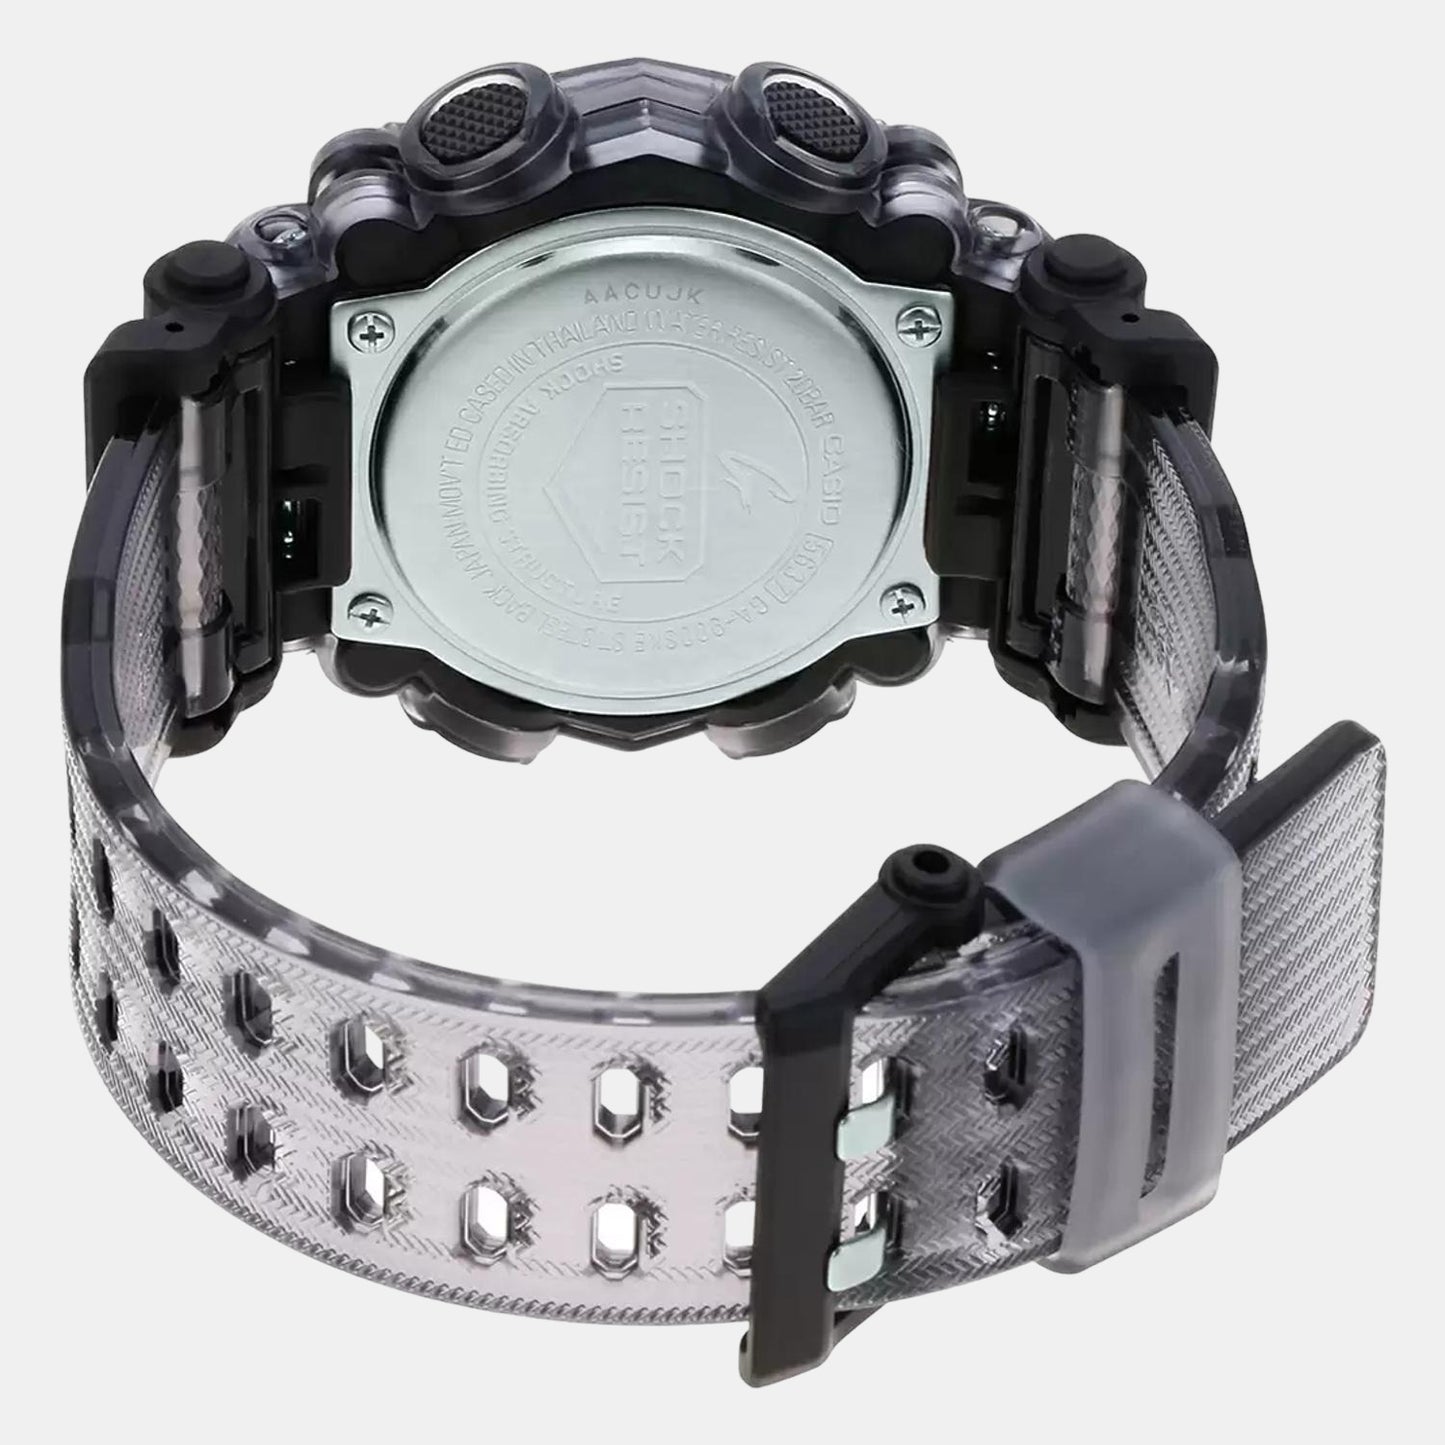 casio-resin-black-digital-mens-watch-g1101